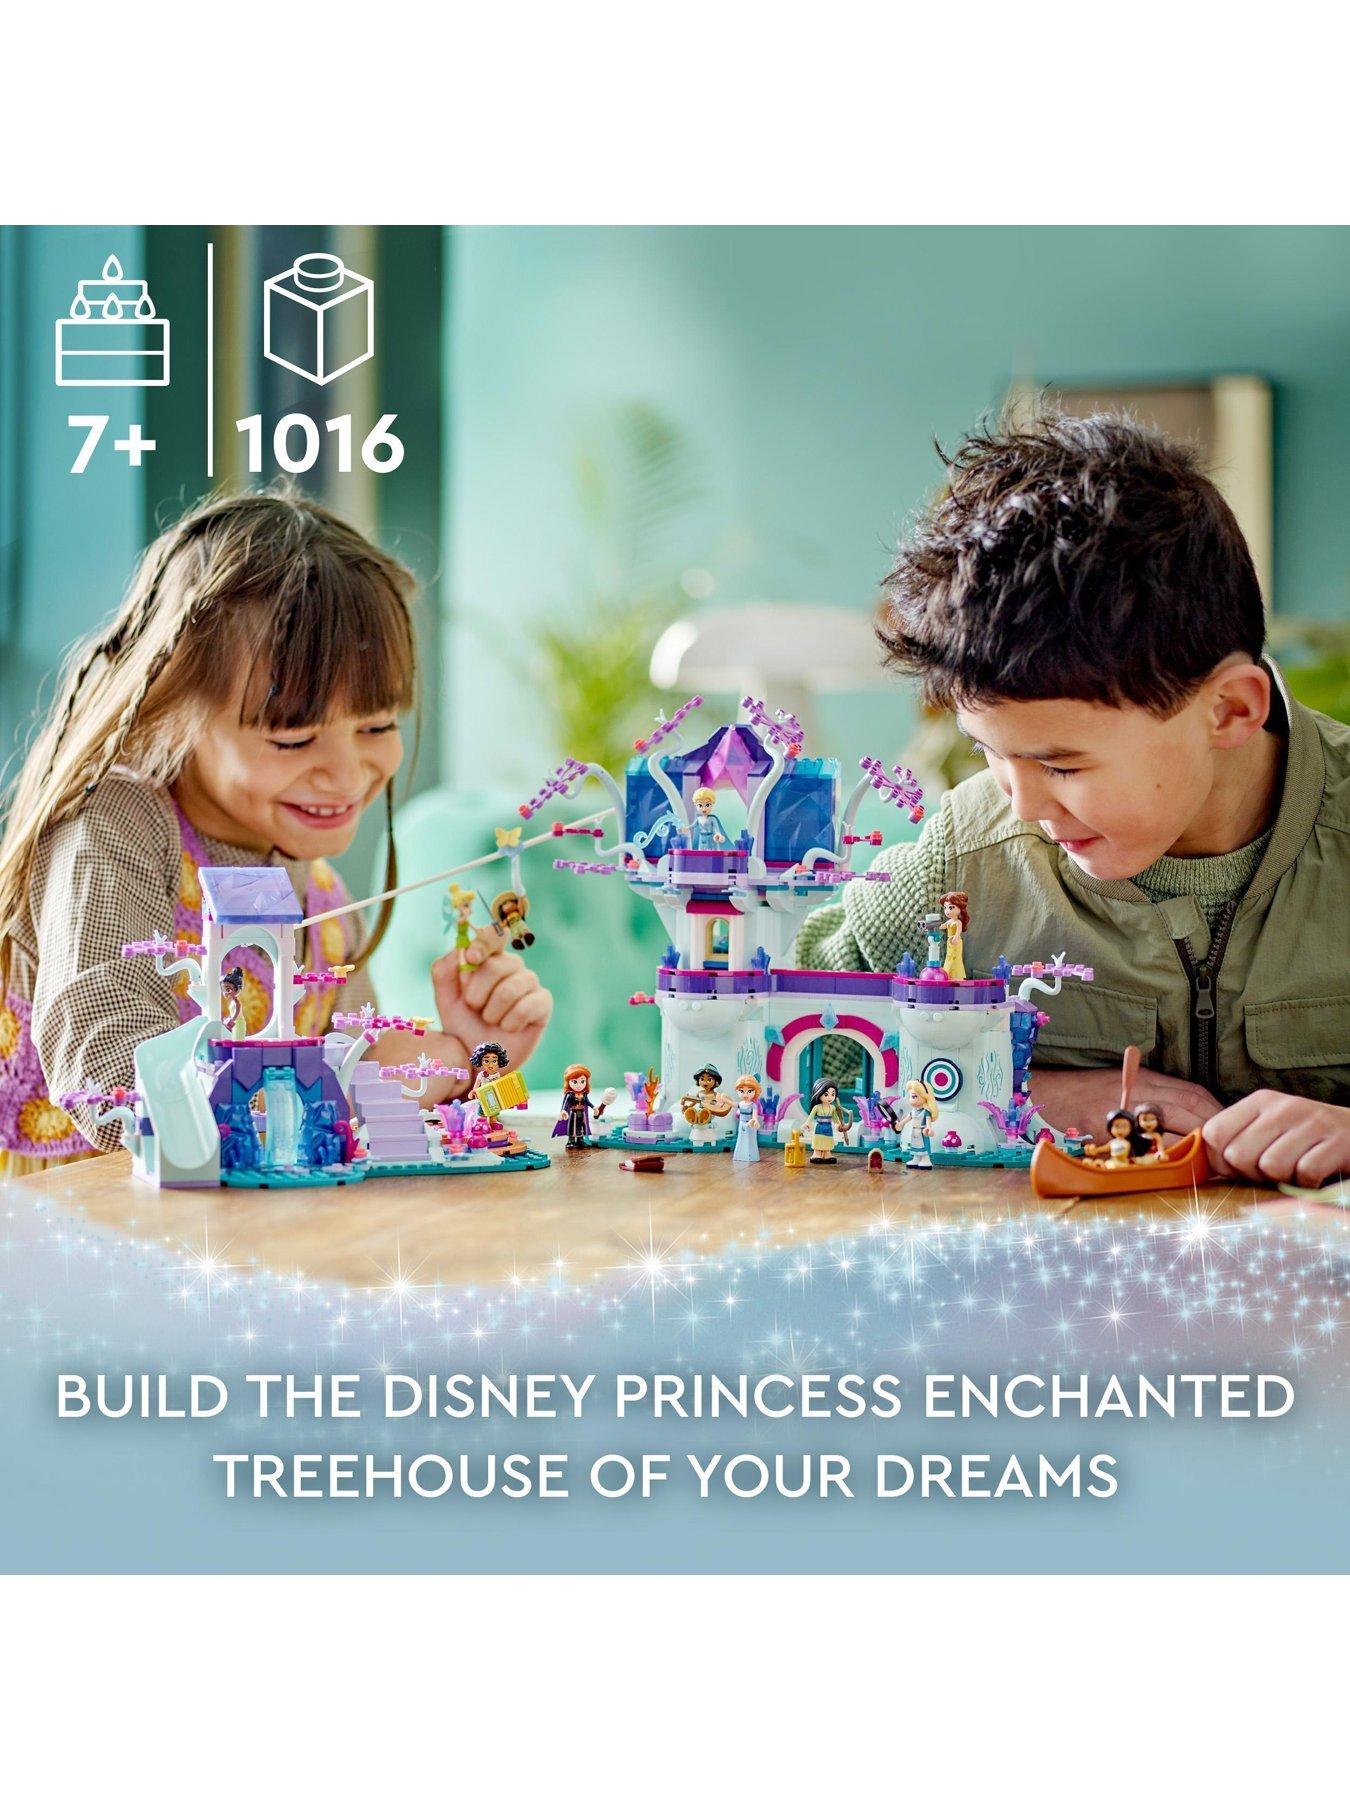 LEGO Disney Princess 43215 The Enchanted Treehouse Set